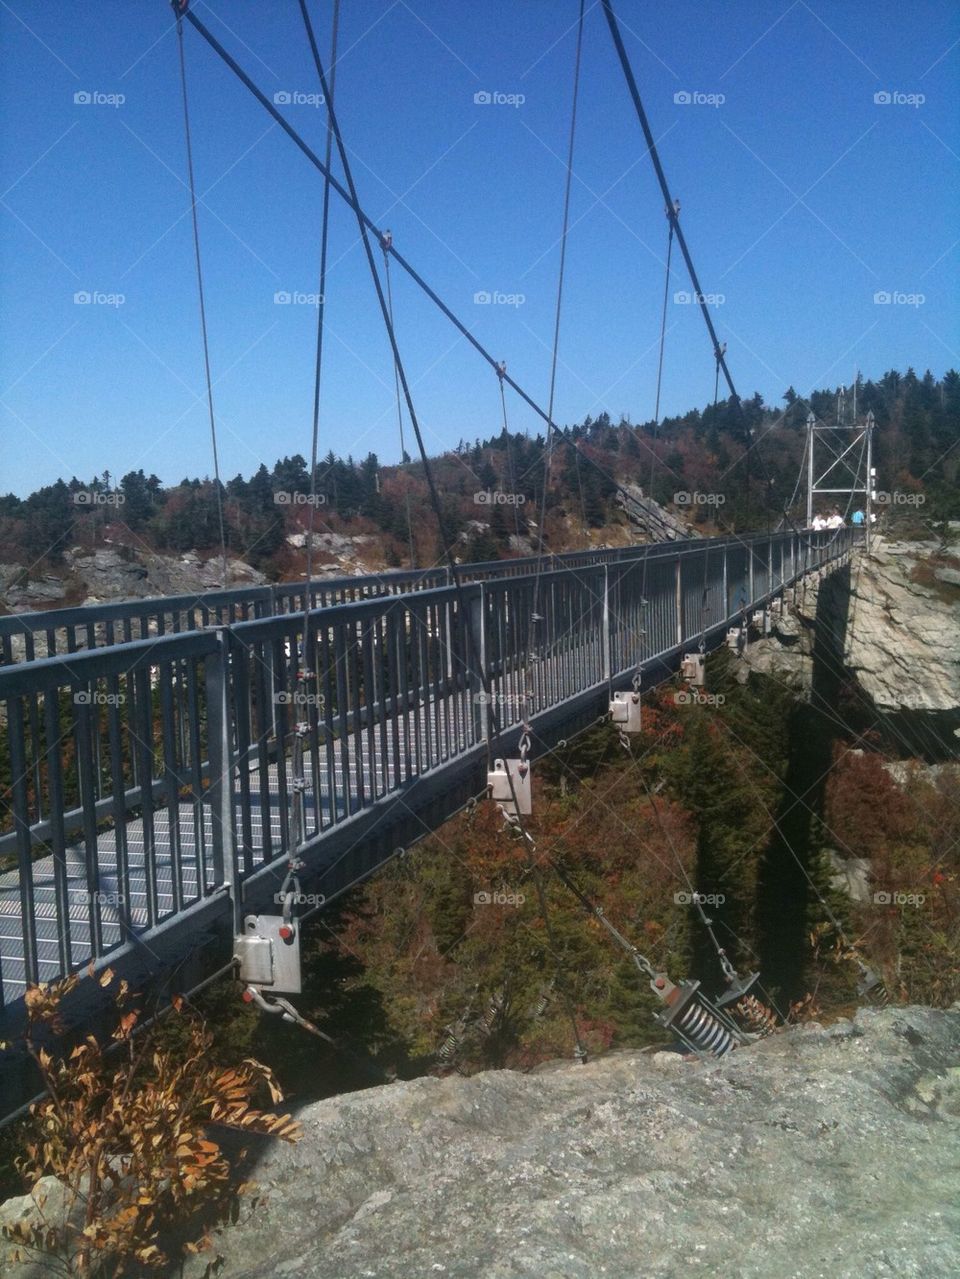 Mile high bridge